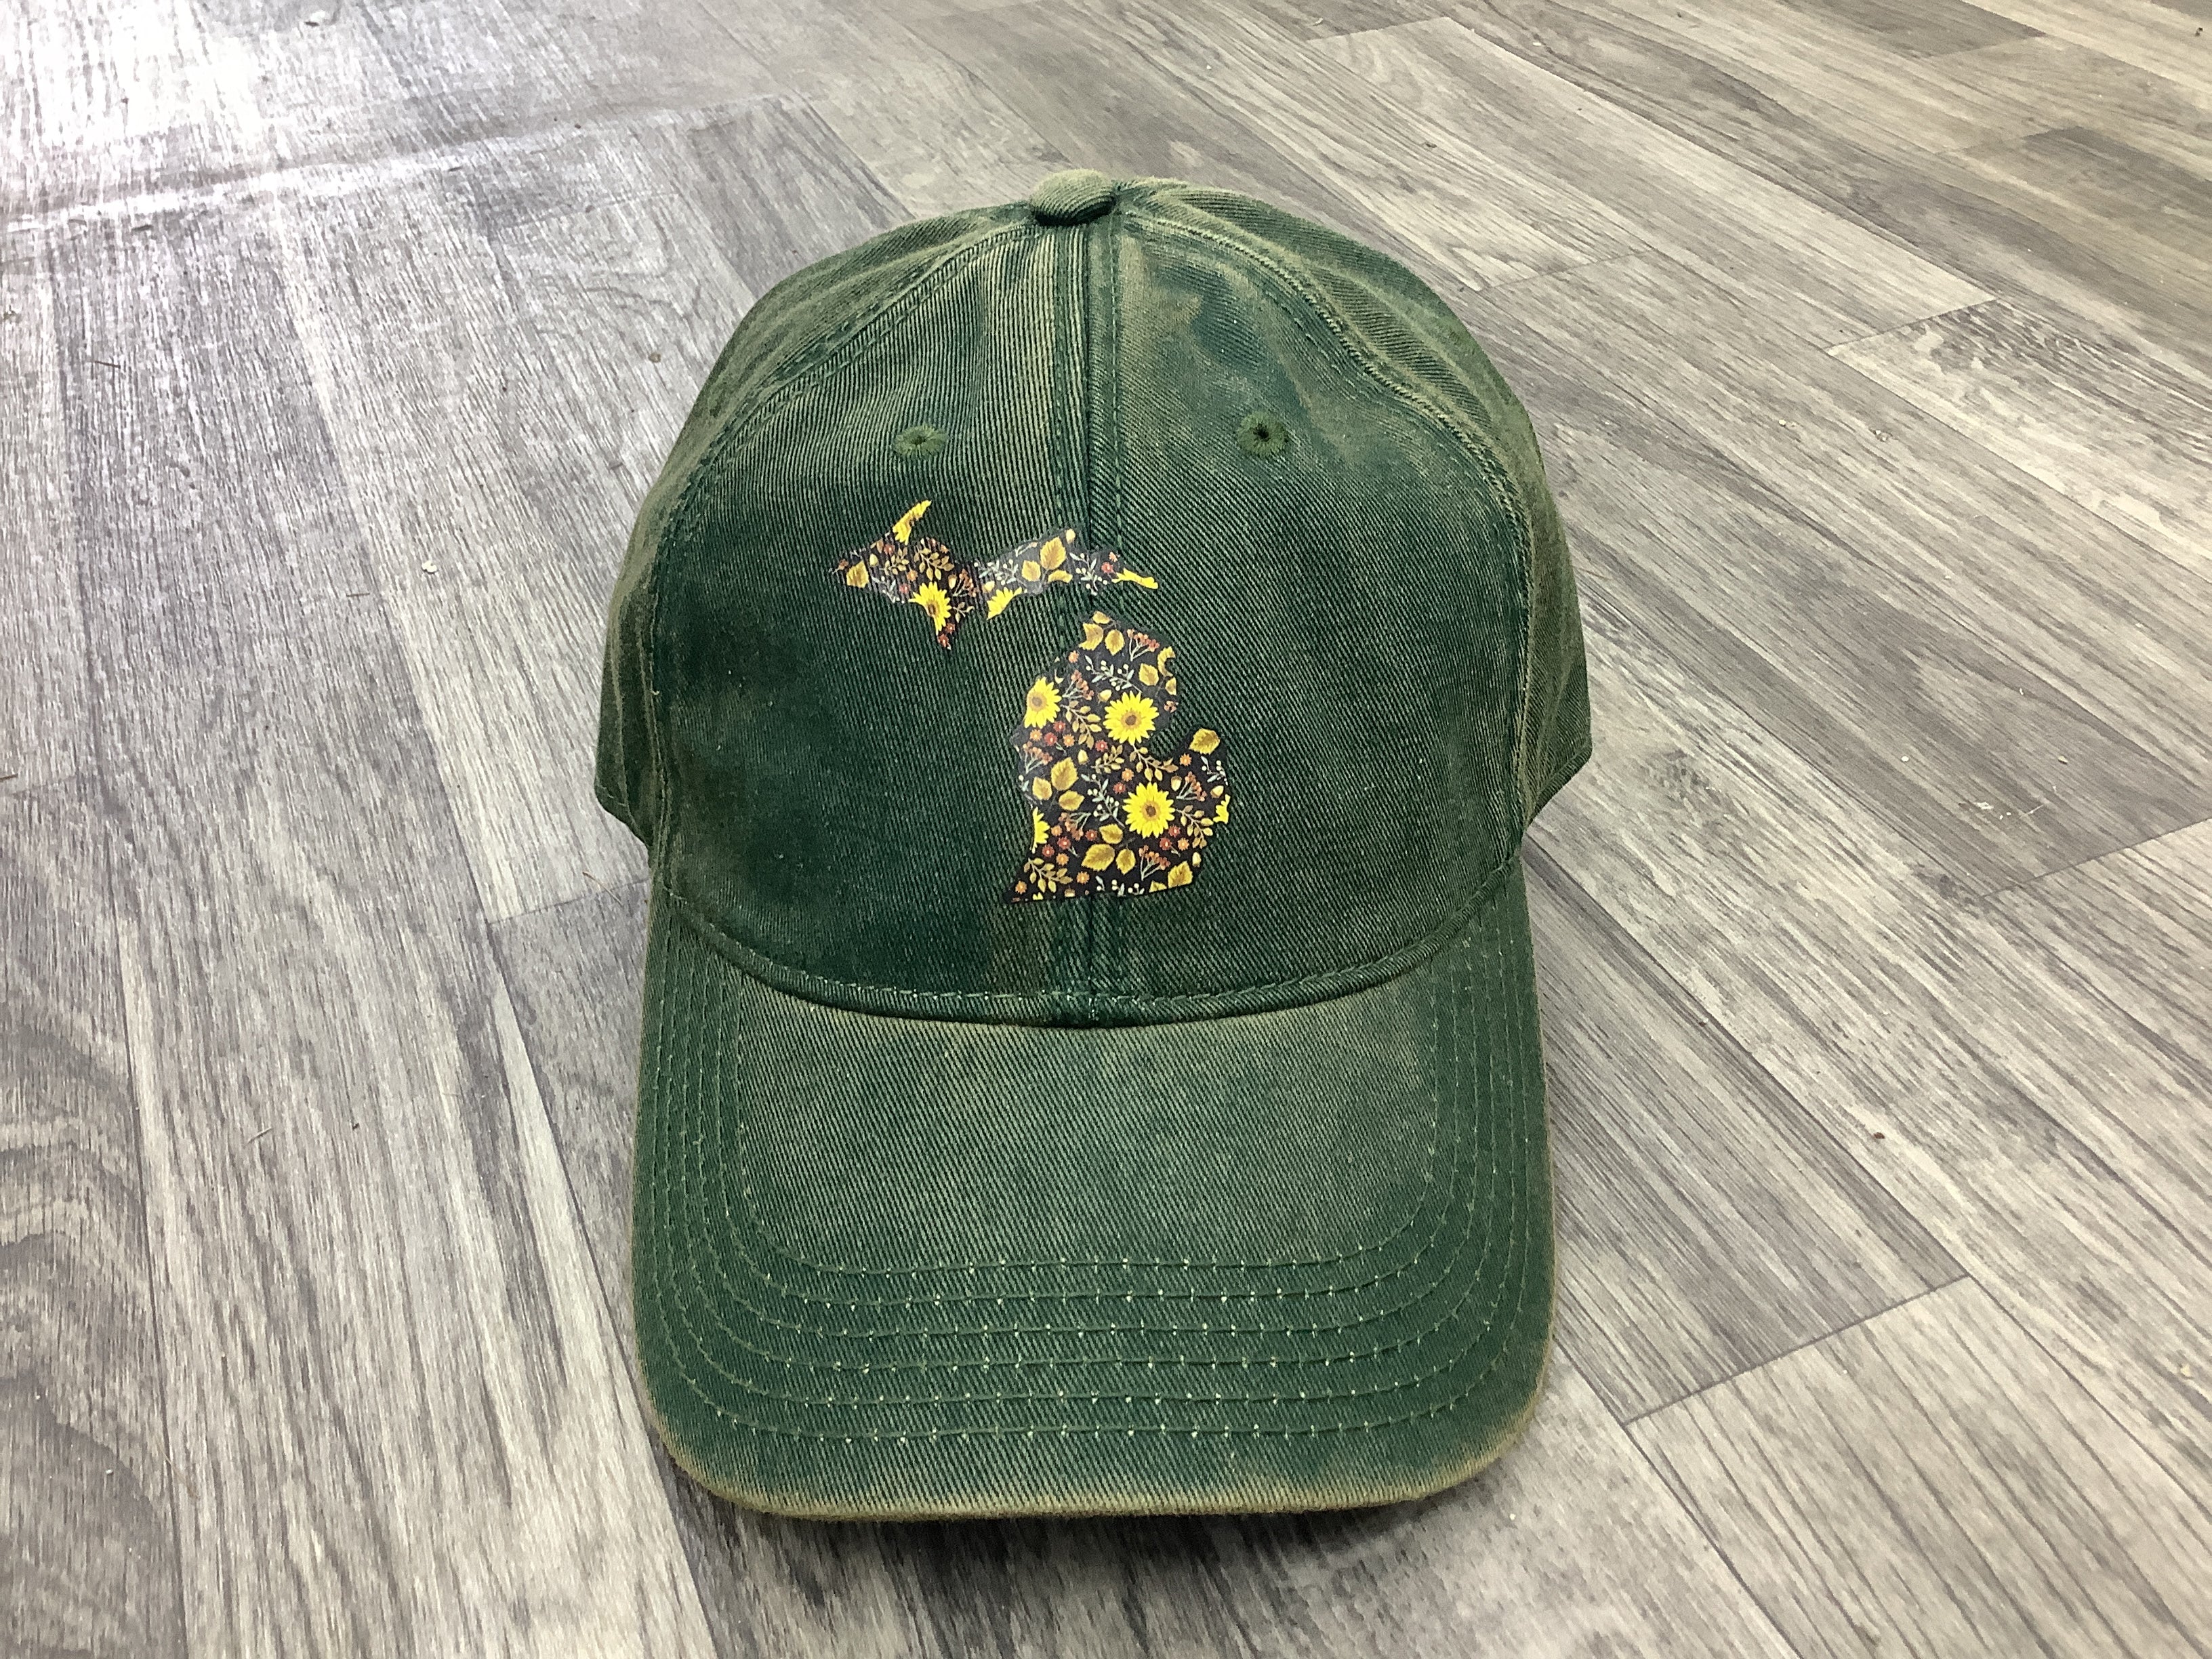 Blossoms - Sunflowers - Michigan - Pressed Hat